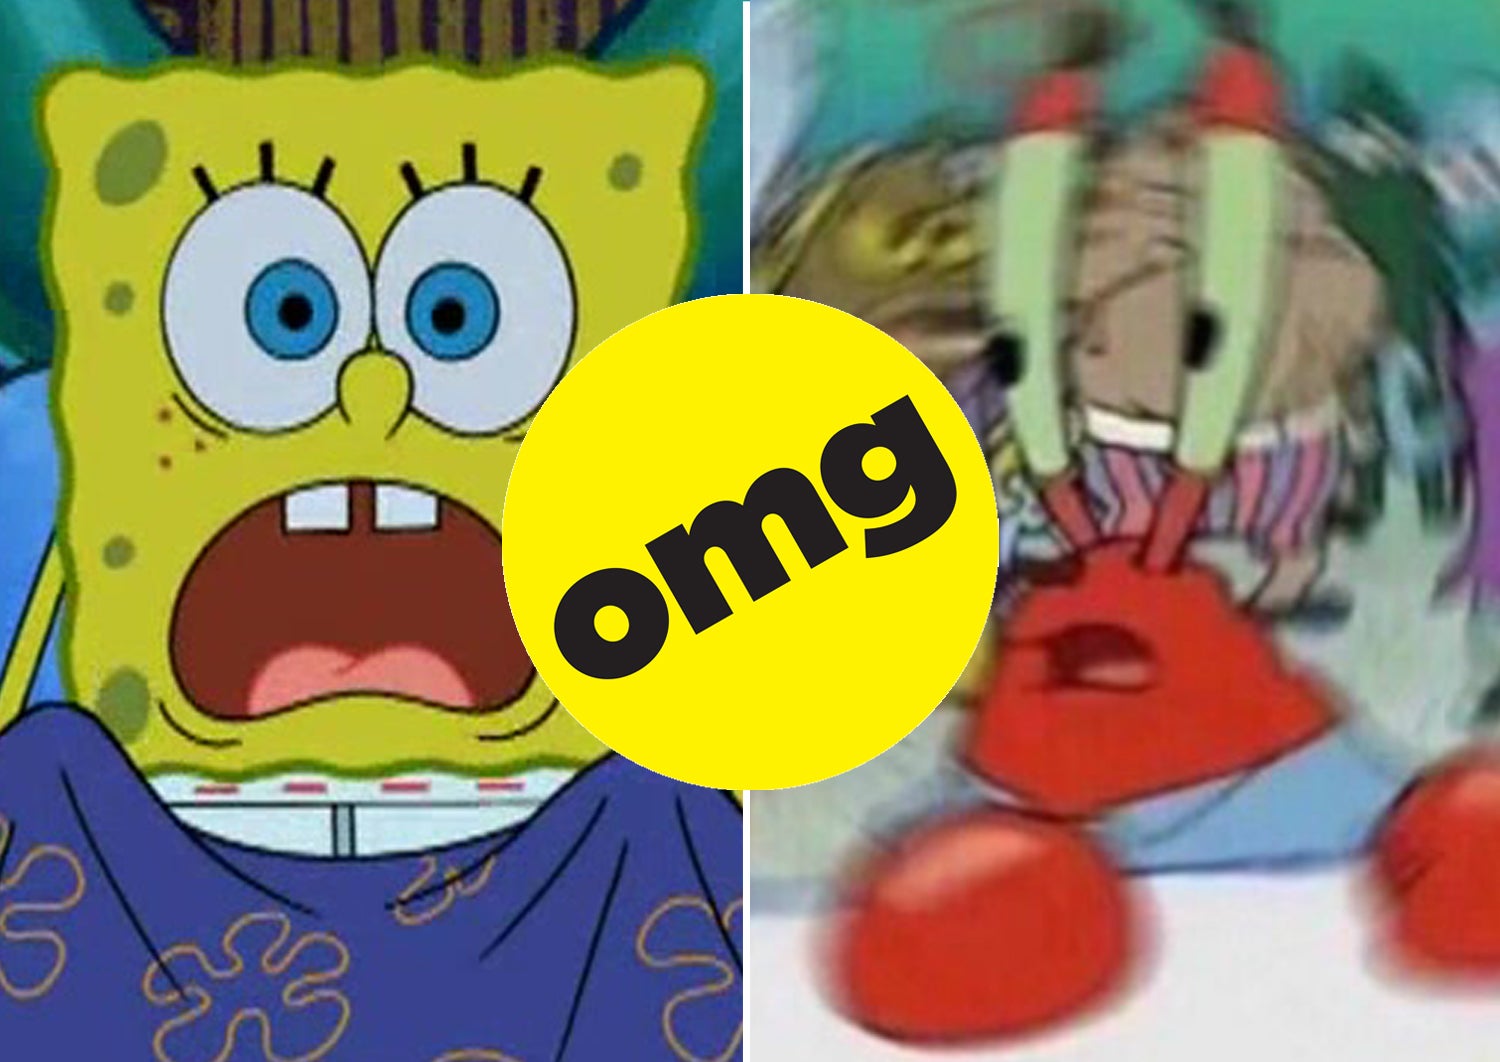 spongebob conspiracy theory